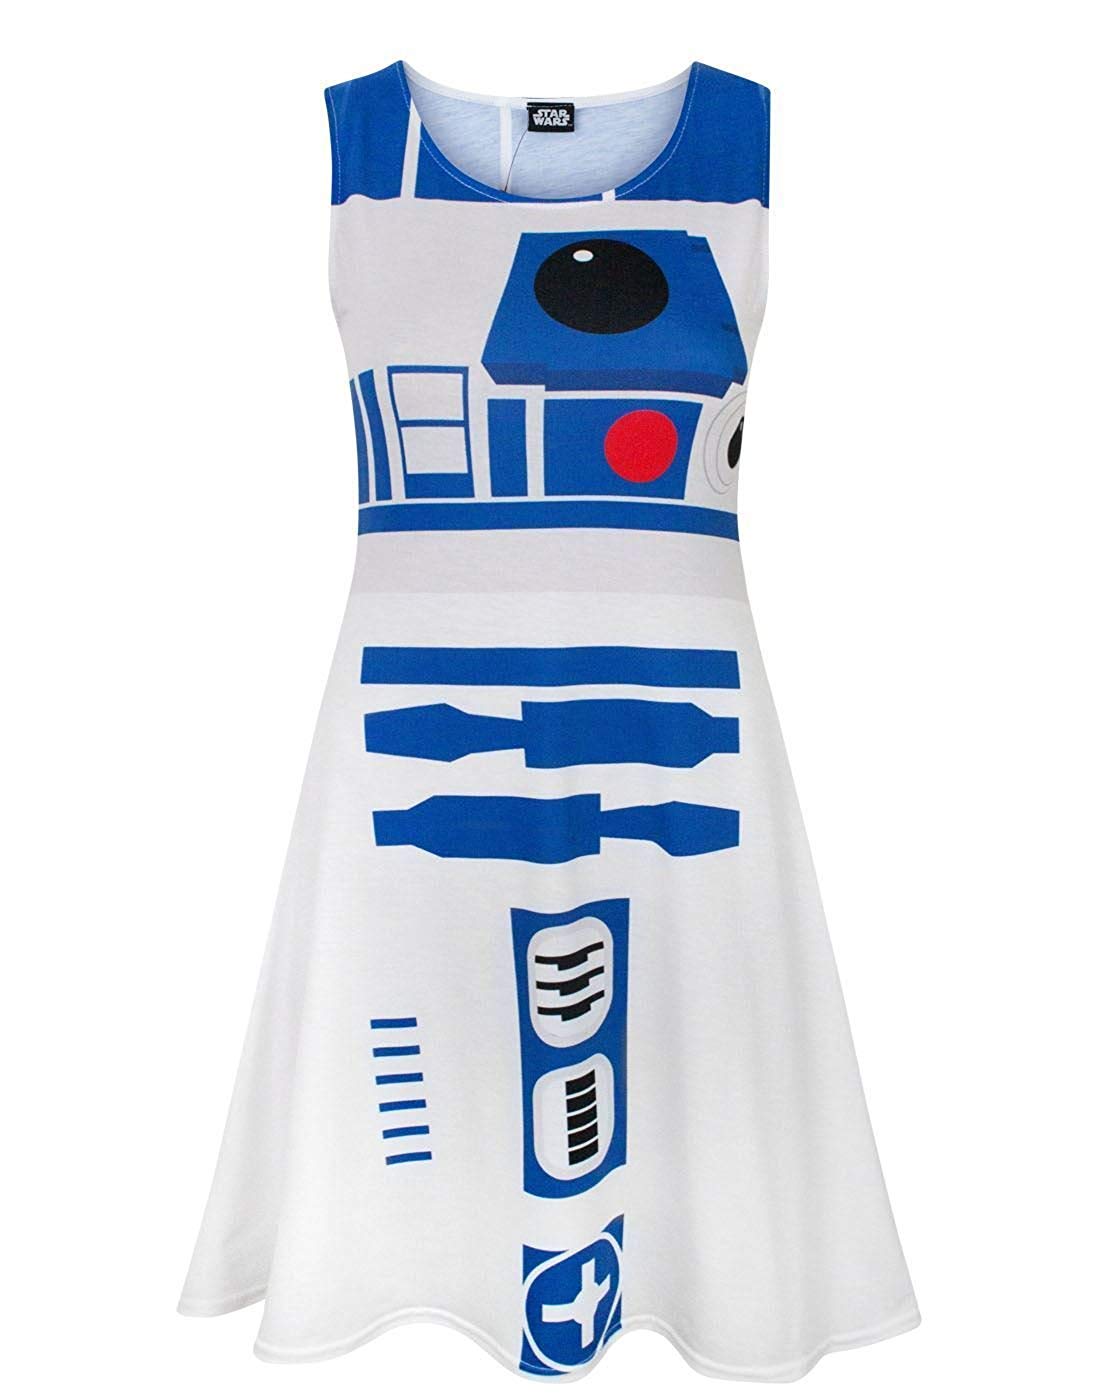 Women's Star Wars R2-D2 Everyday Cosplay Dress on Amazon